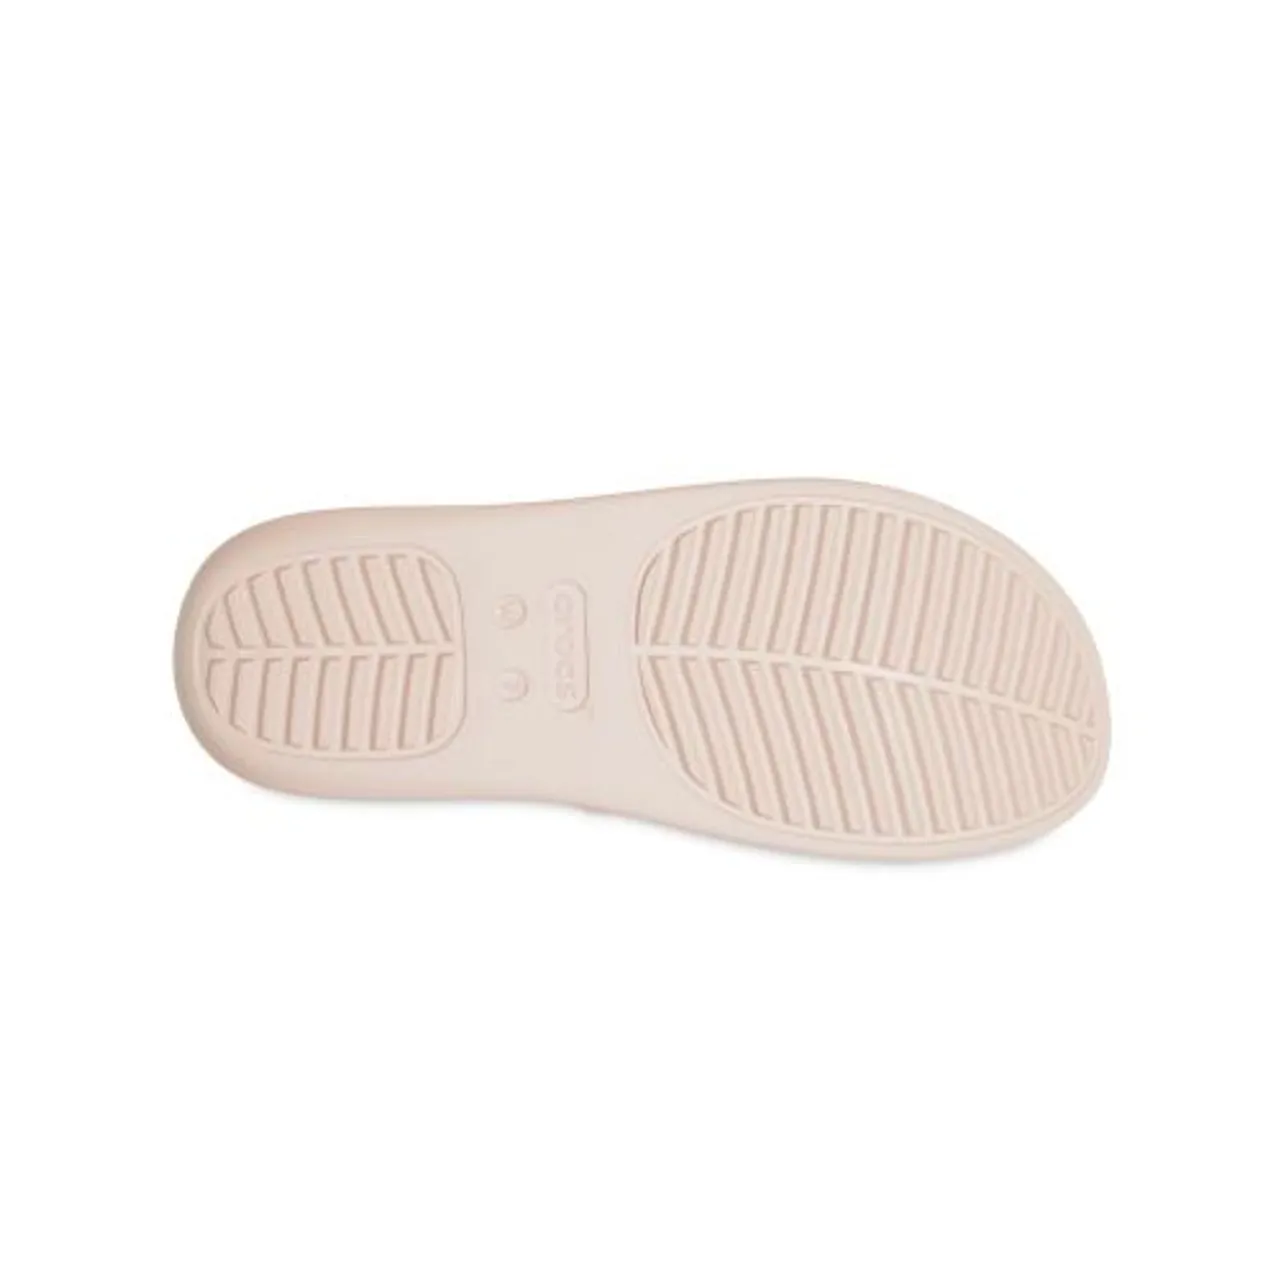 Crocs Womens Quartz Getaway Strappy Sandal